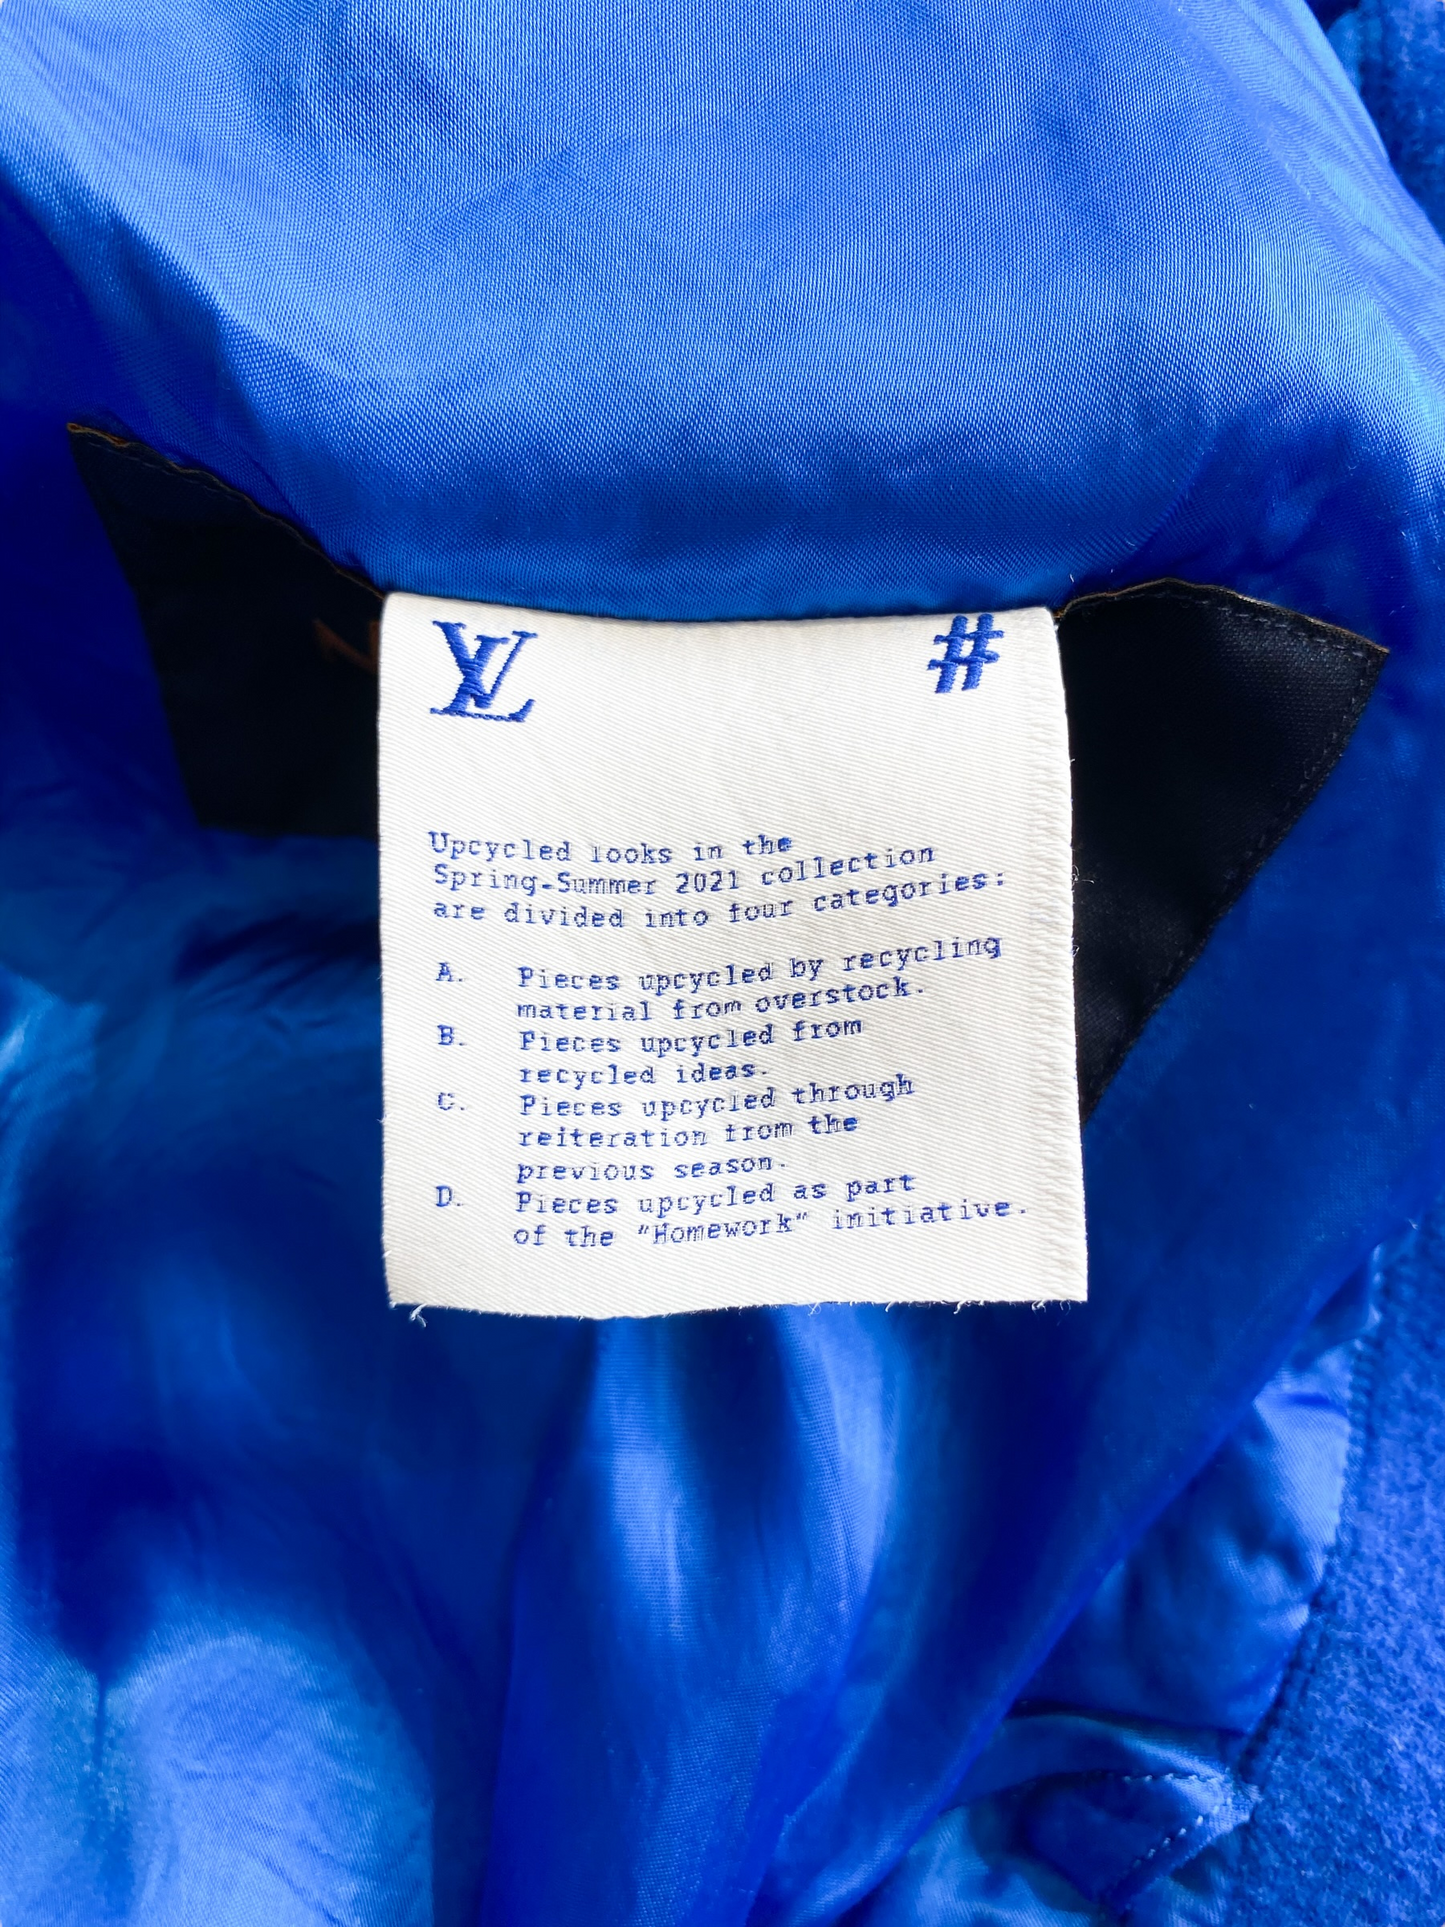 Louis Vuitton Blue & White Puppet Varsity Jacket